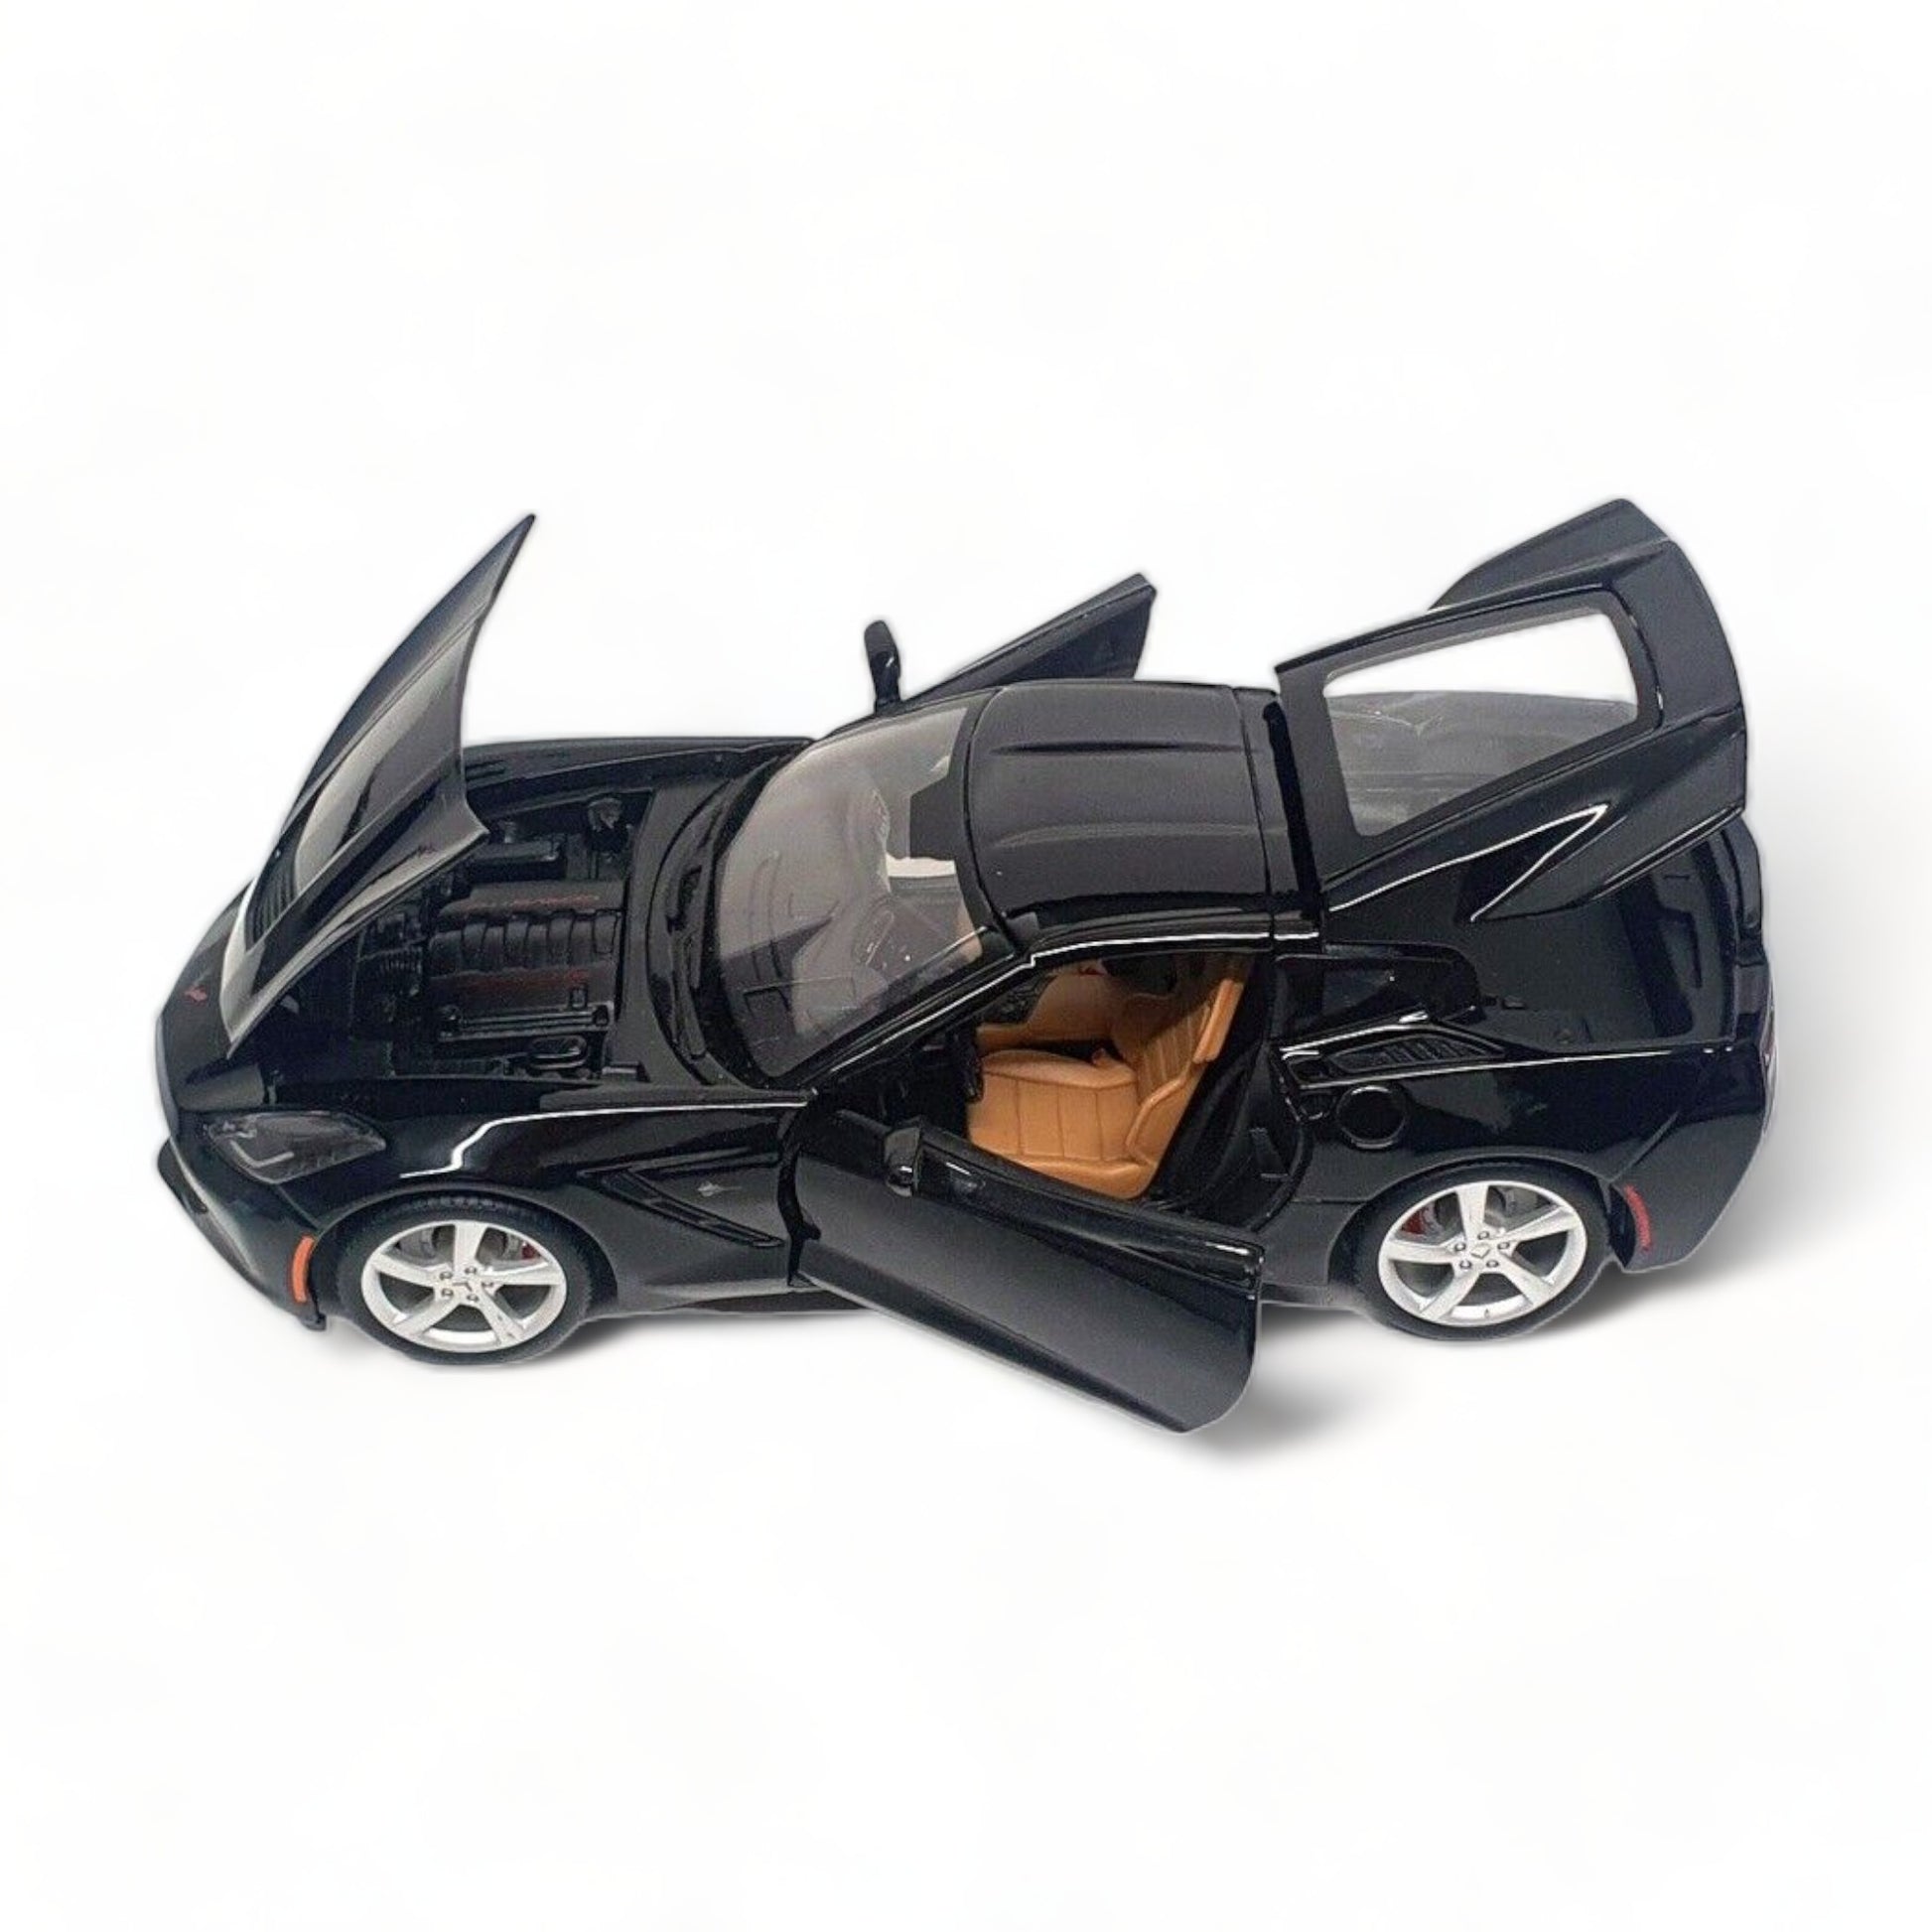 1/18 Diecast Chevrolet Corvette Stingray Black 2014 Scale Model Car by Maisto